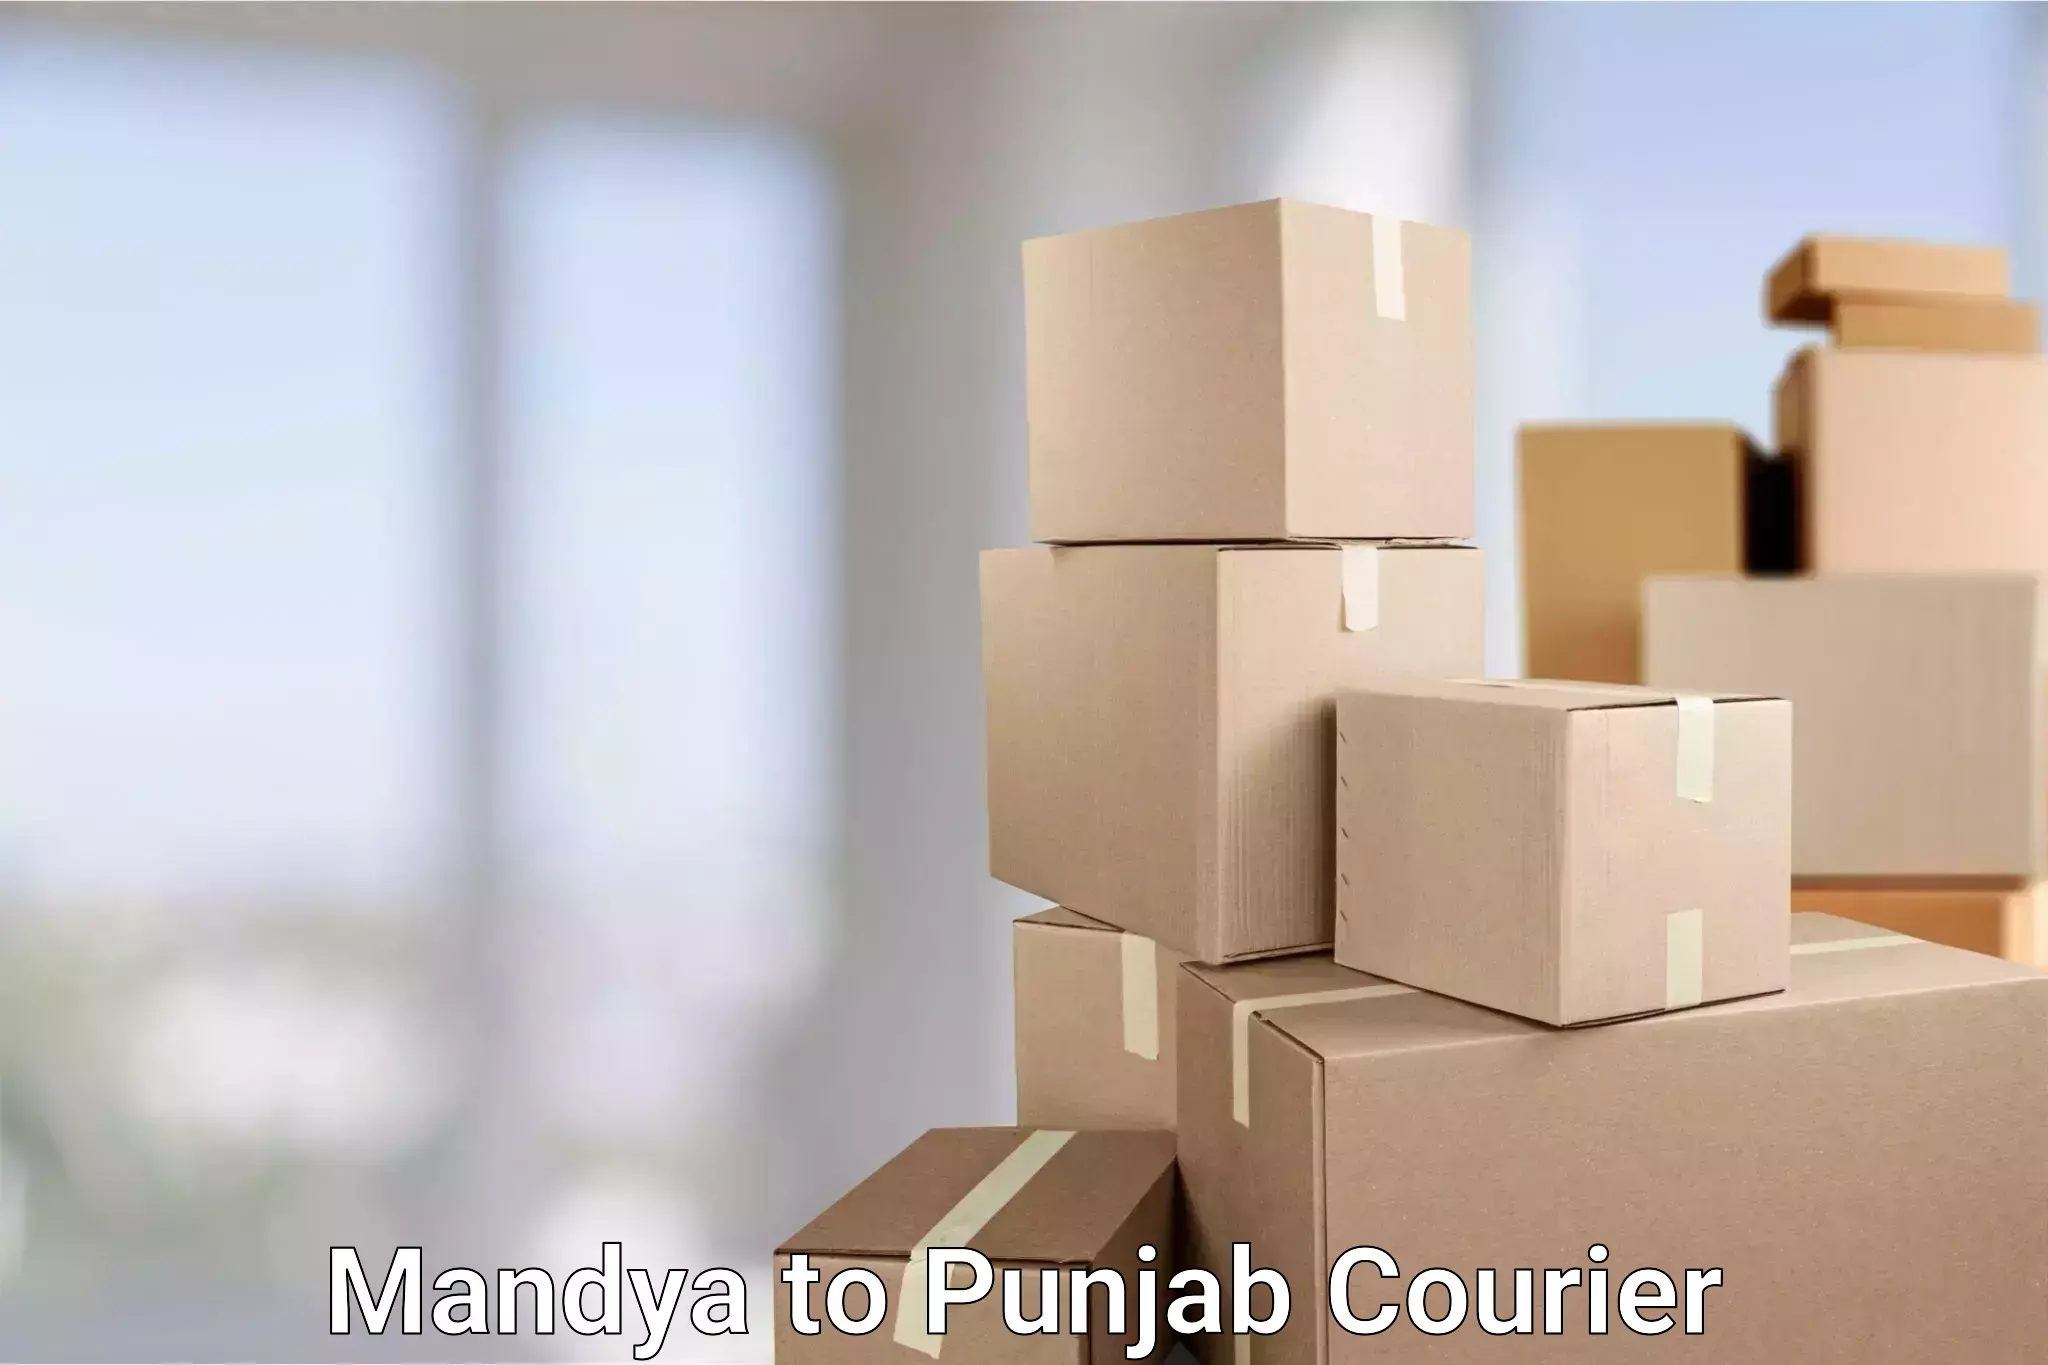 Sustainable courier practices Mandya to Hoshiarpur